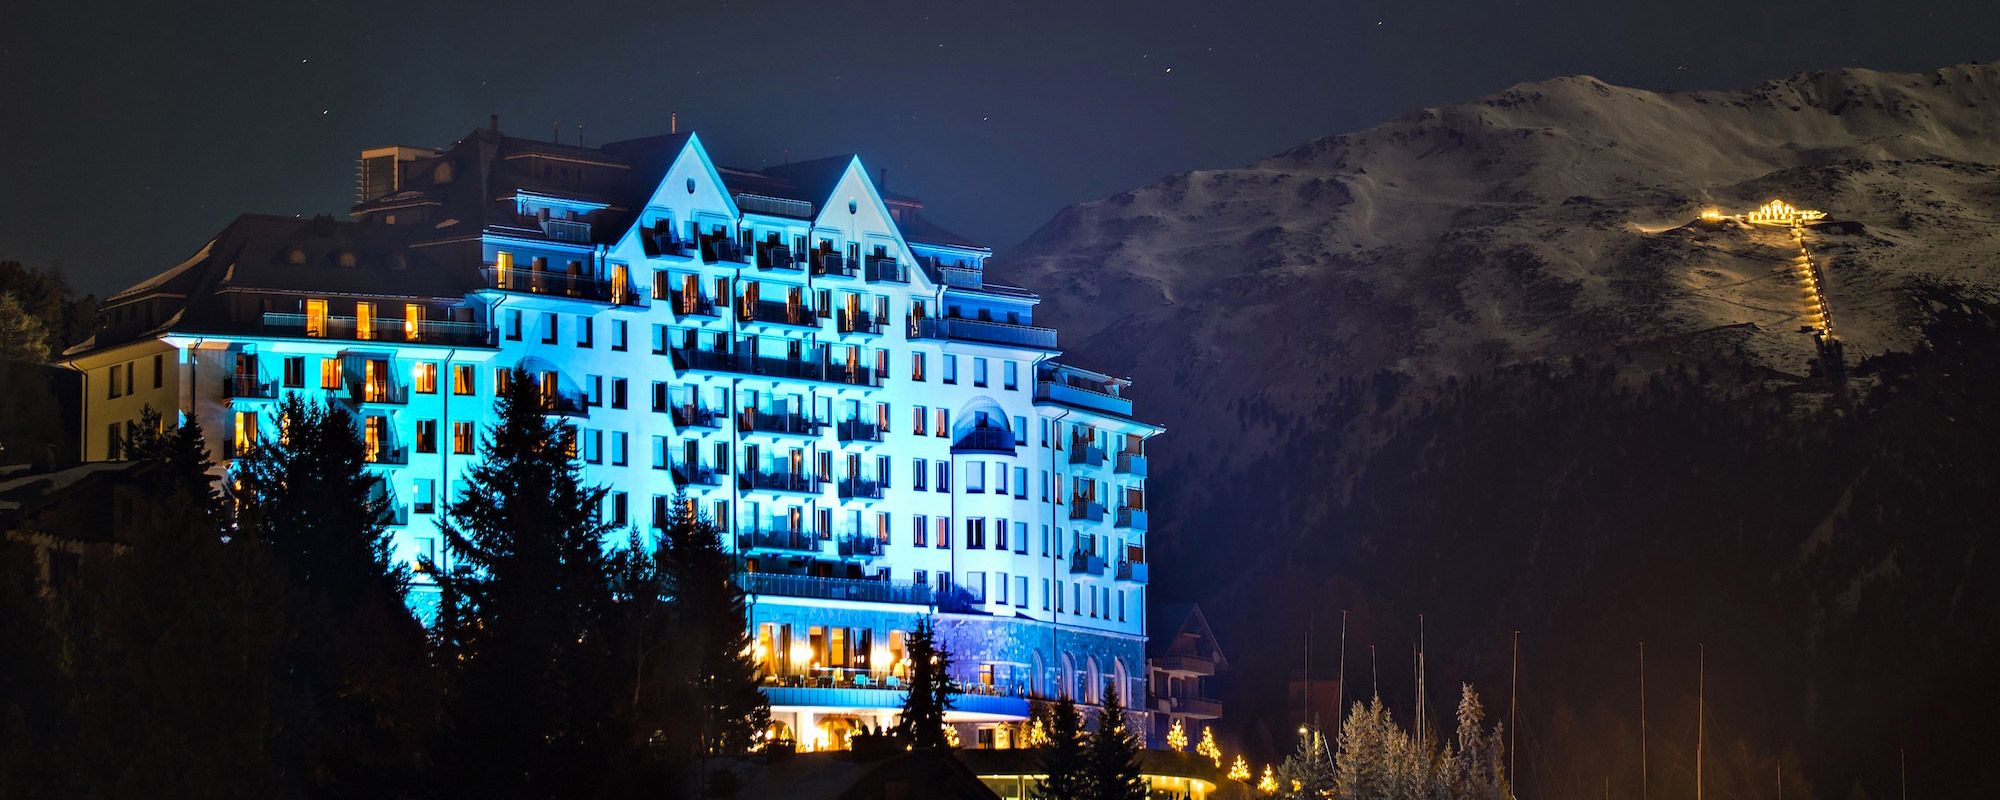 St. Moritz, Carlton hotel